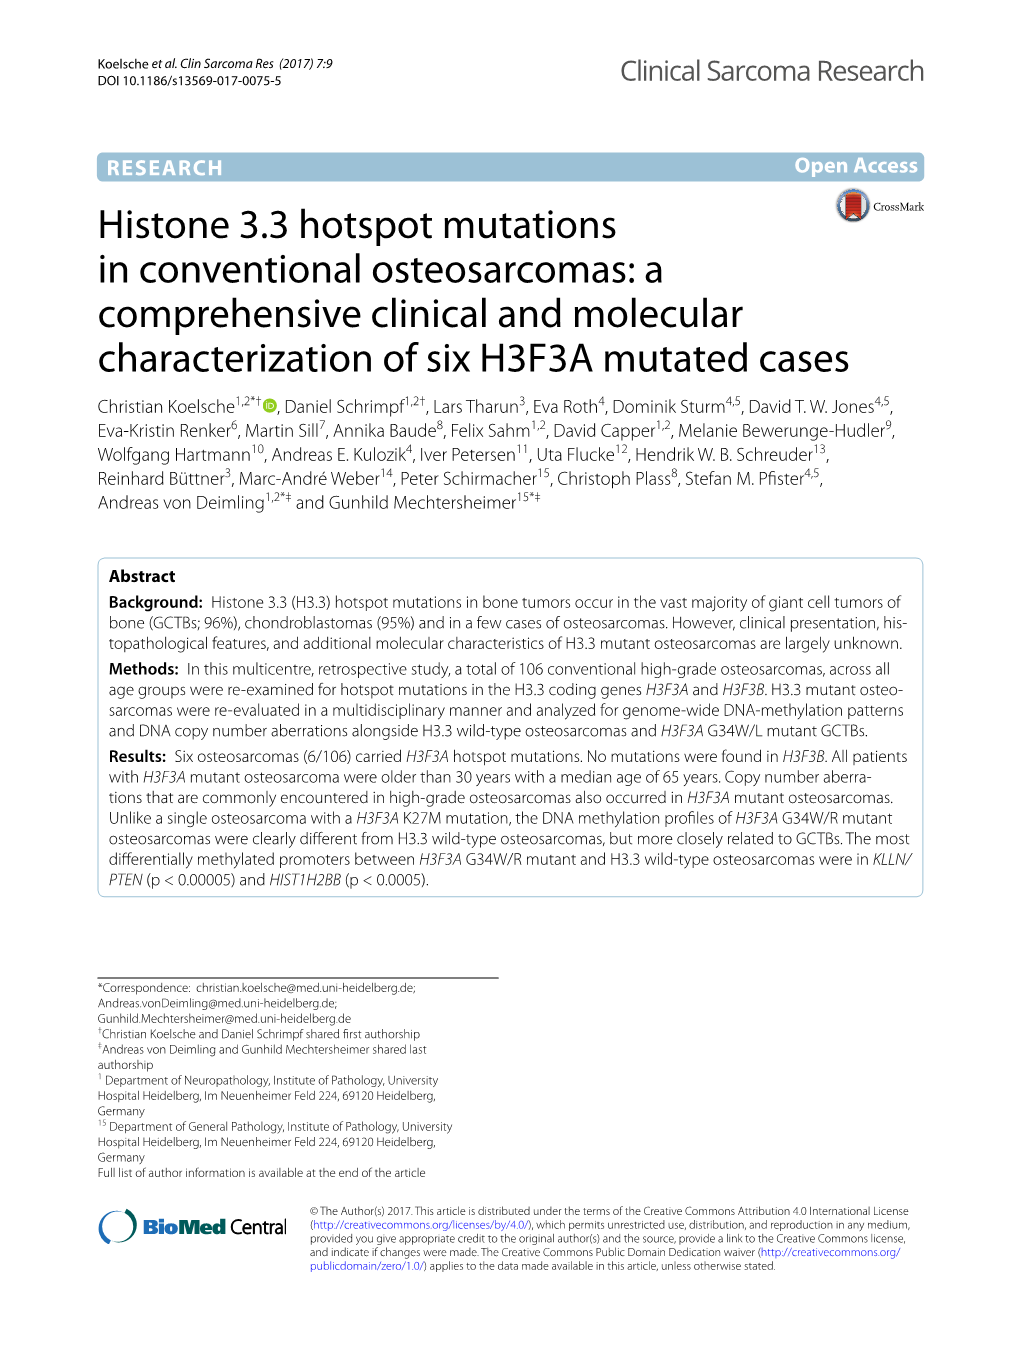 Histone 3.3 Hotspot Mutations in Conventional Osteosarcomas